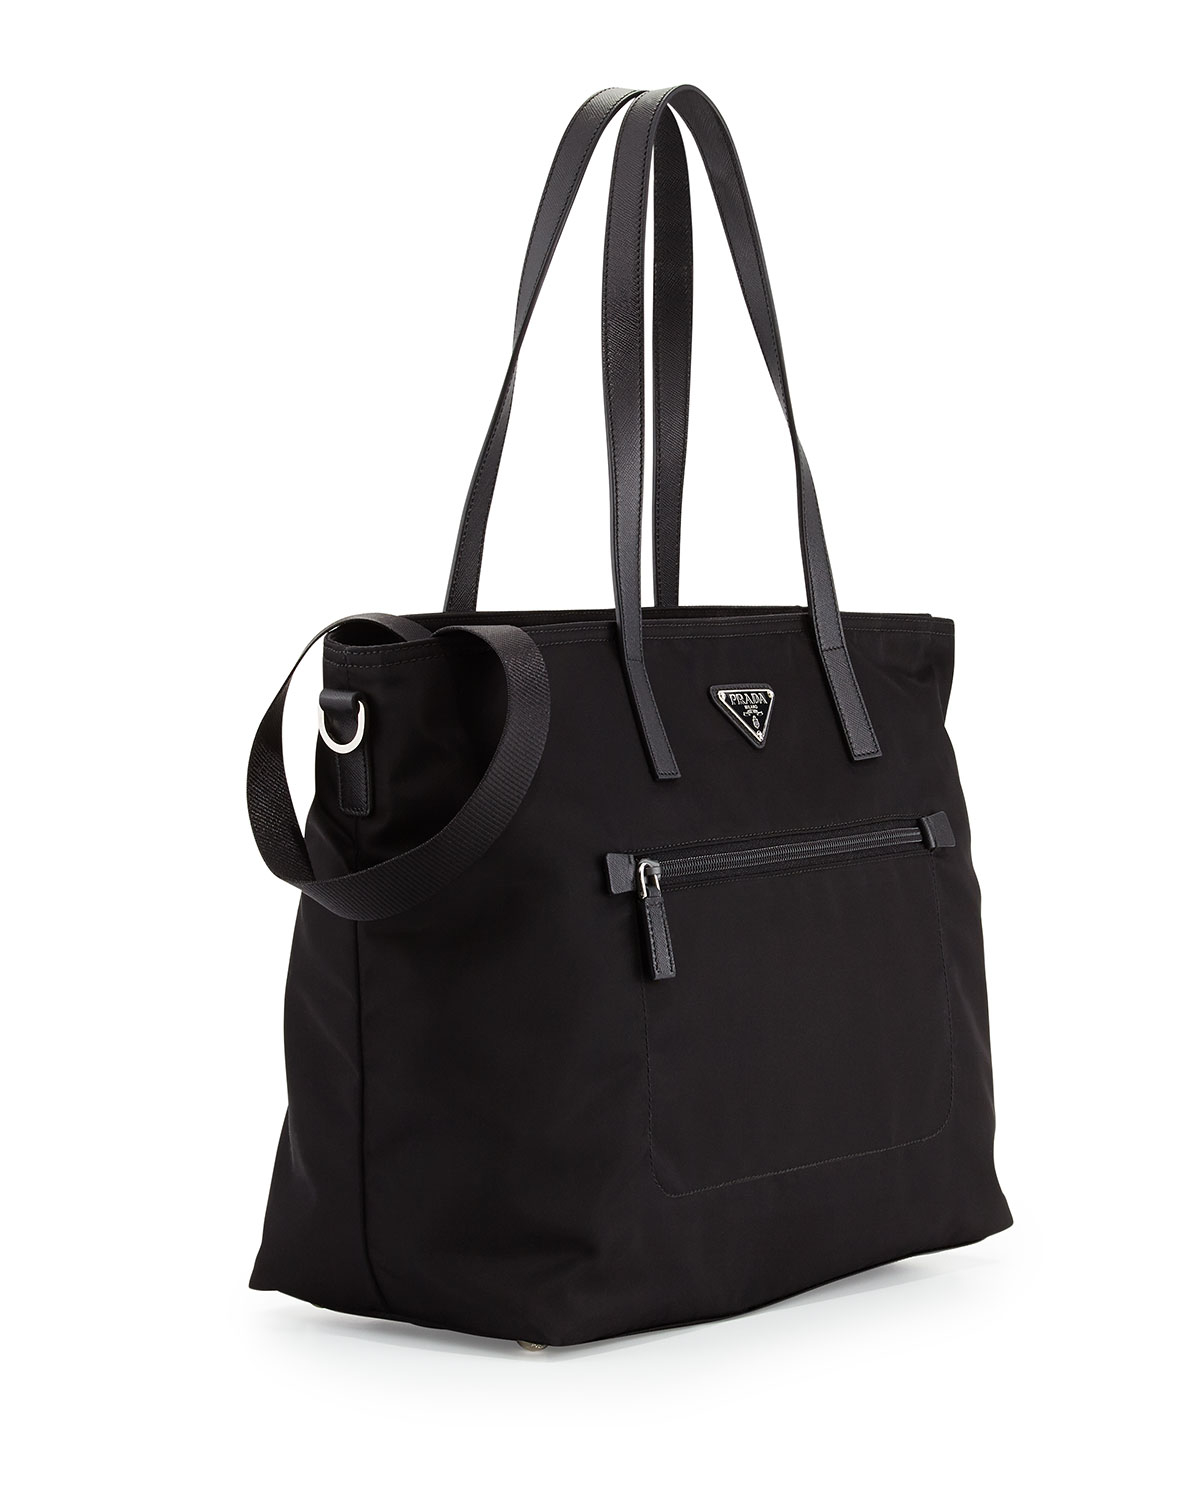 Lyst - Prada Vela Zip-Front Tote Bag in Black